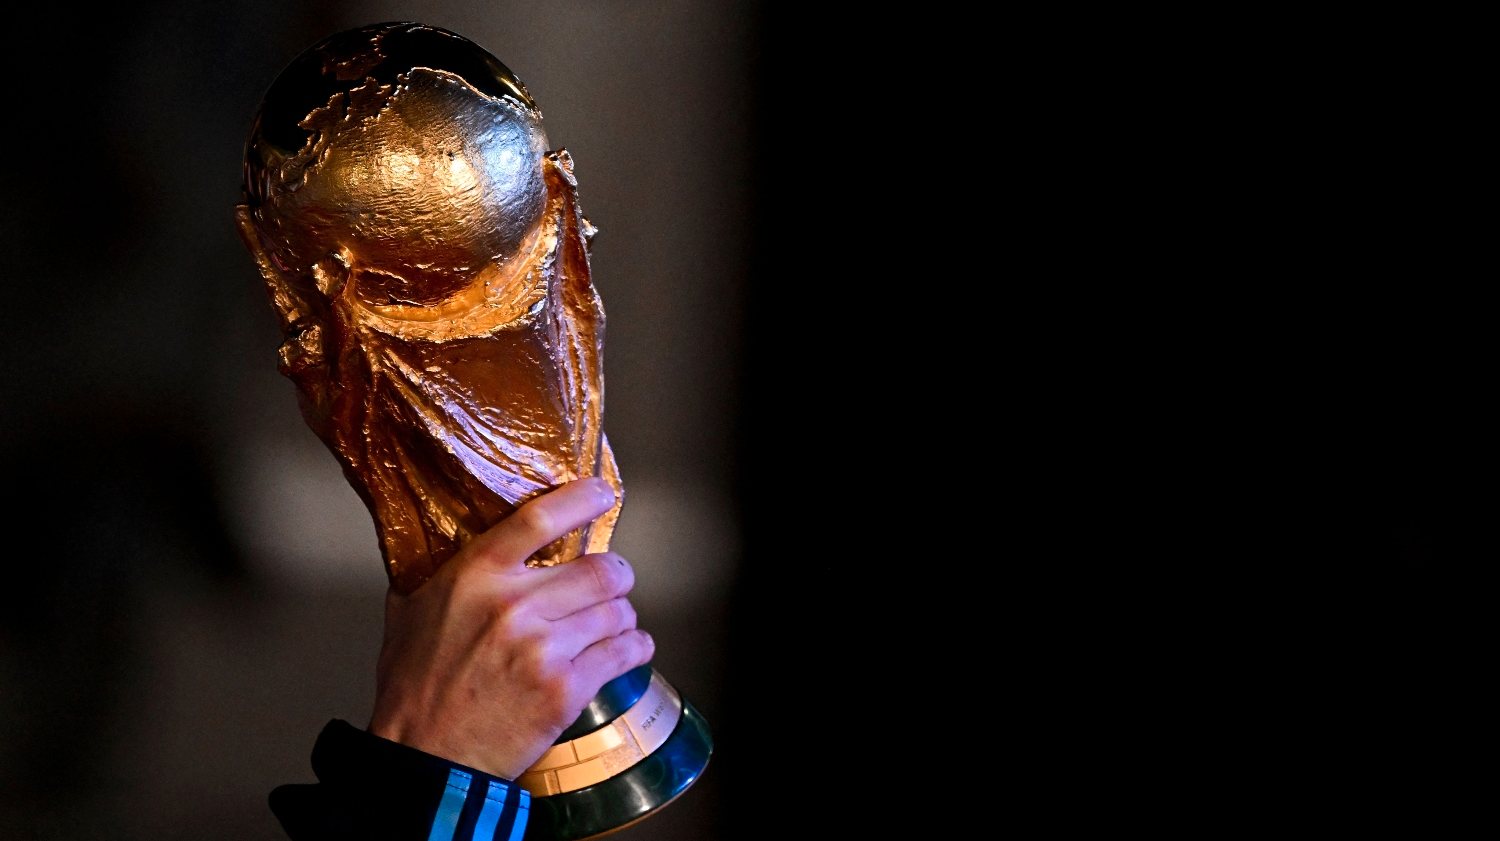 Próximo Campeonato do Mundo, onde a Argentina irá tentar defender o título conquistado no Qatar, realiza-se entre EUA, Canadá e México